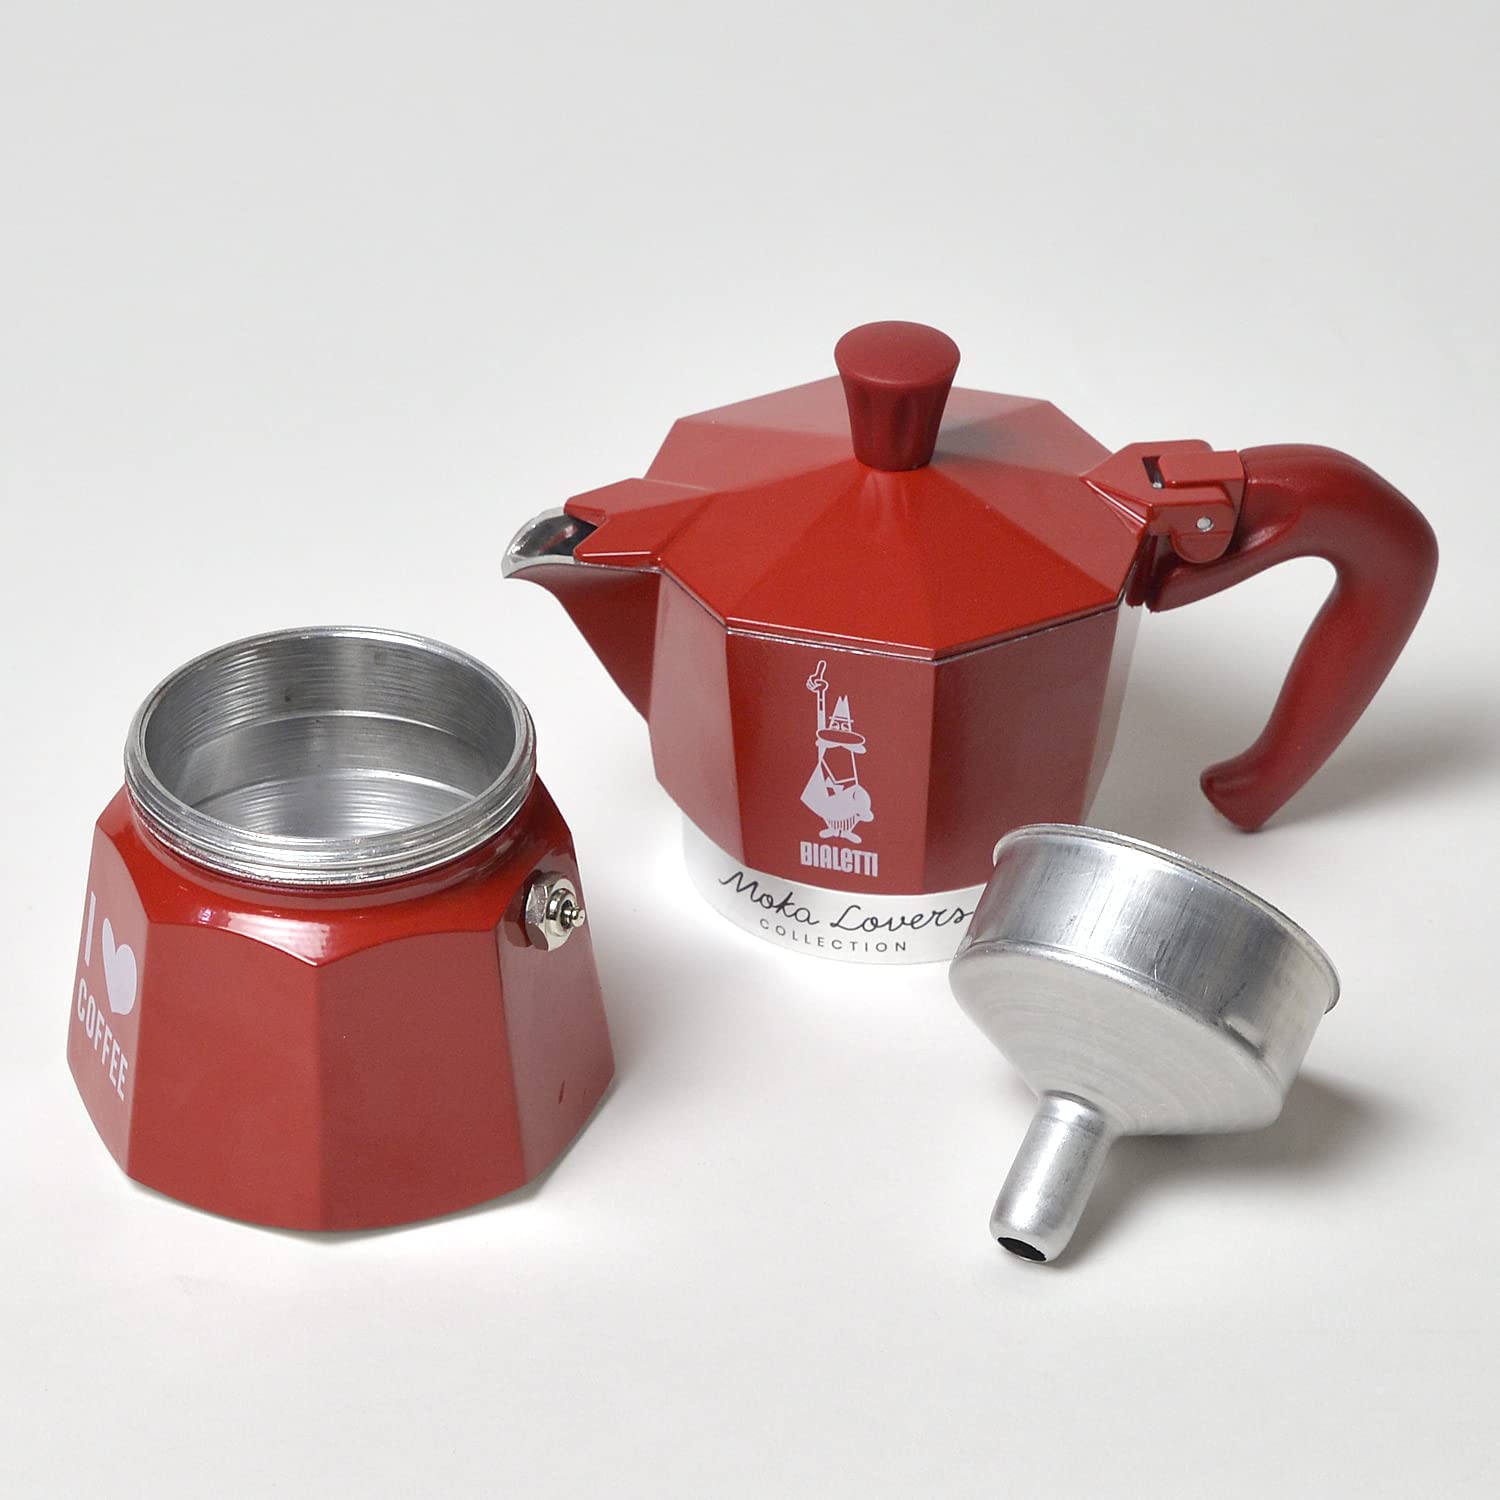 MOKA pot Bialetti Express 6 cups, red – I love coffee